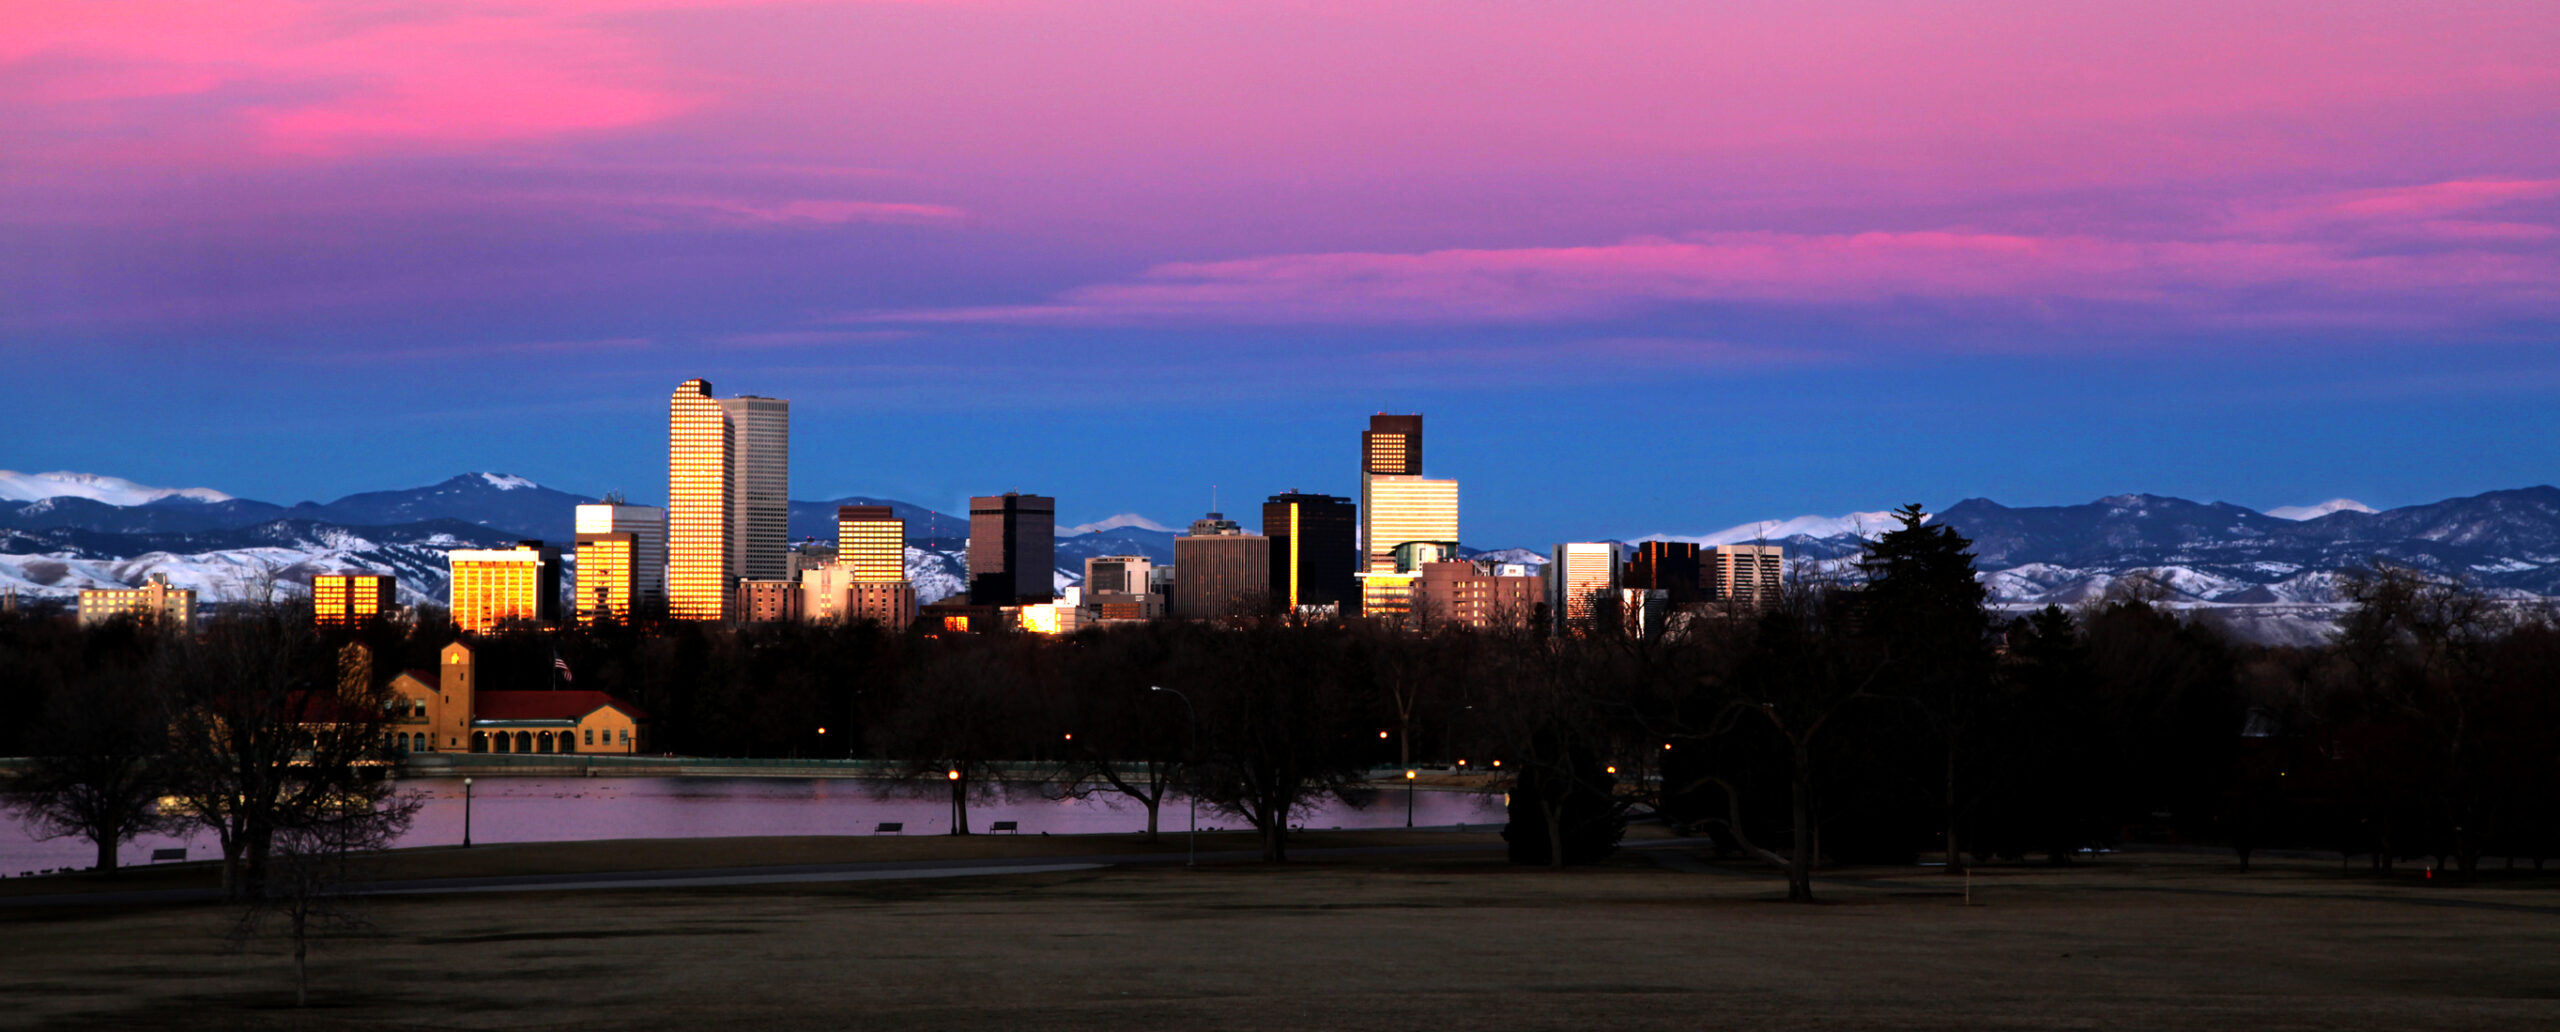 Denver Colorado Skyline at Sun Rise or Dawn